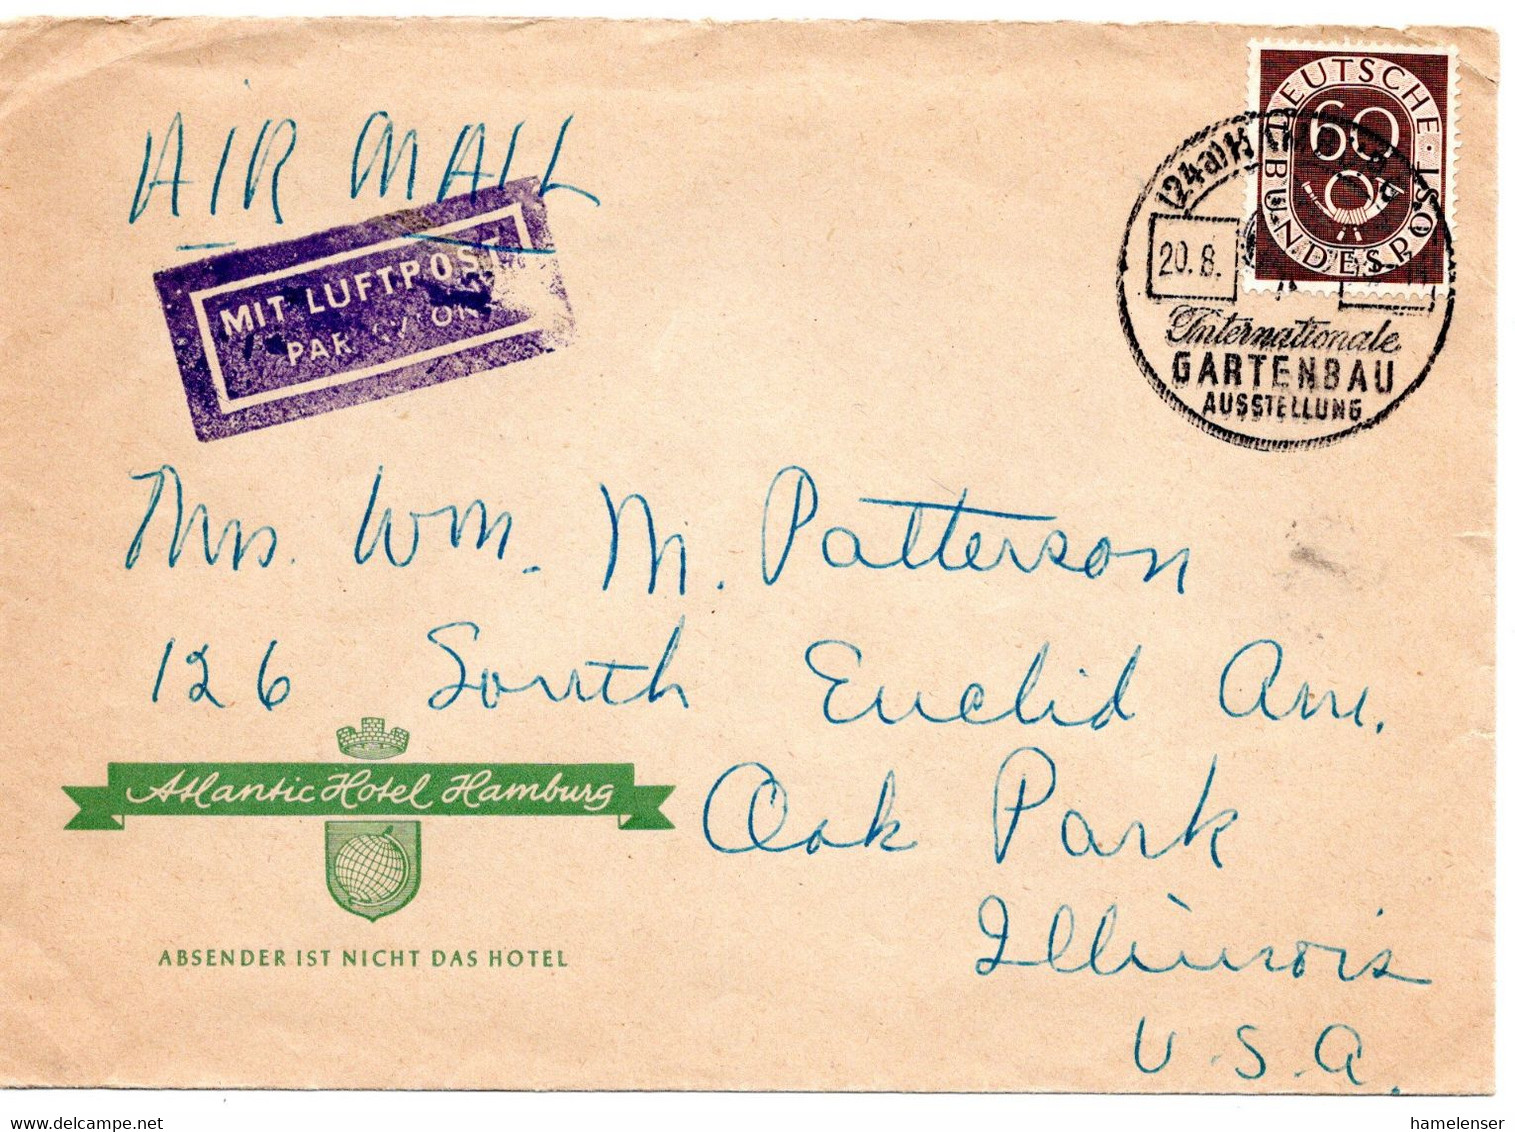 55680 - Bund - 1953 - 60Pfg. Posthorn EF A. LpBf. M. SoStpl. HAMBURG - GARTENBAUAUSSTELLUNG -> Oak Park, IL (USA) - Lettres & Documents